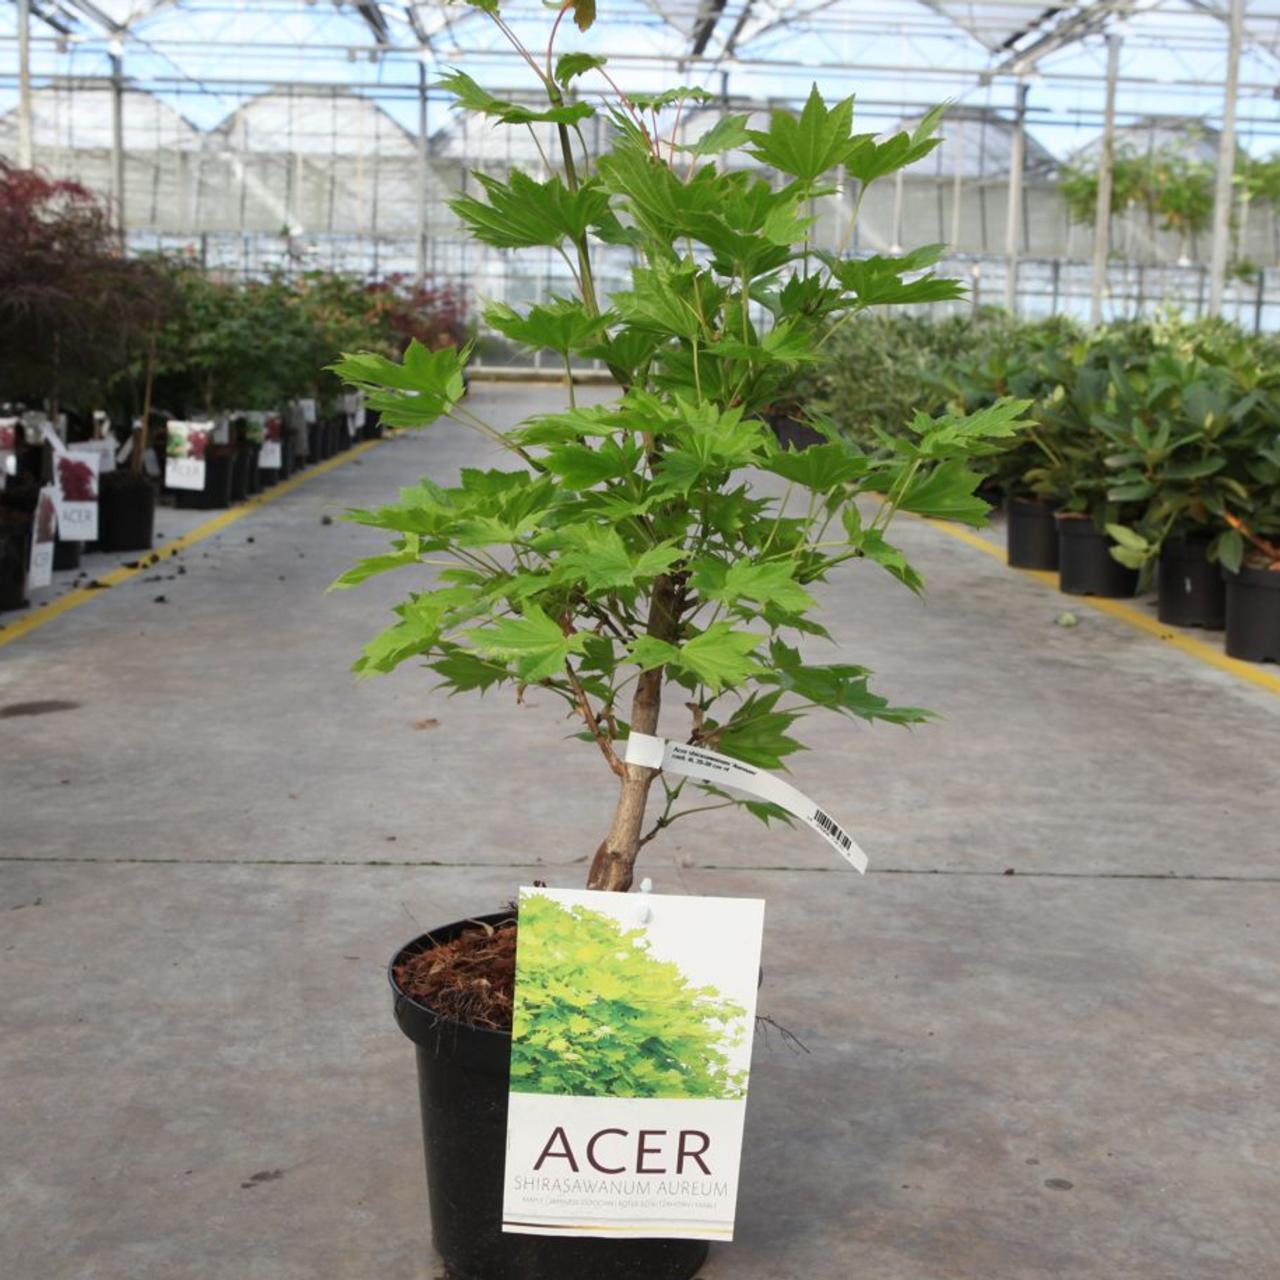 Acer shirasawanum 'Aureum' plant